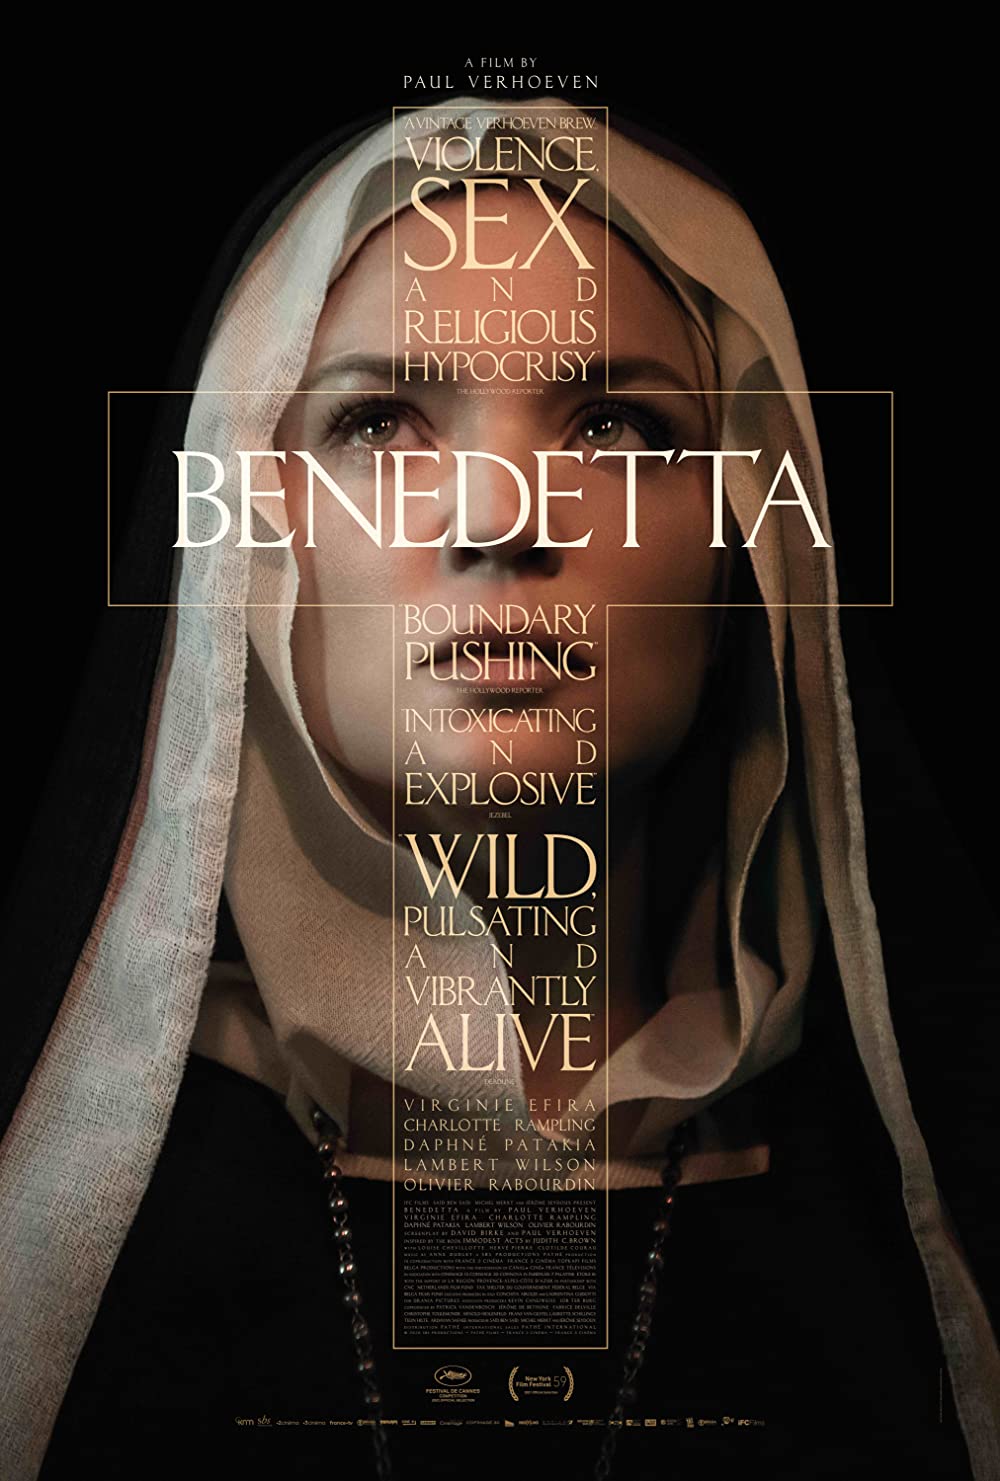 Câu Chuyện về Benedetta